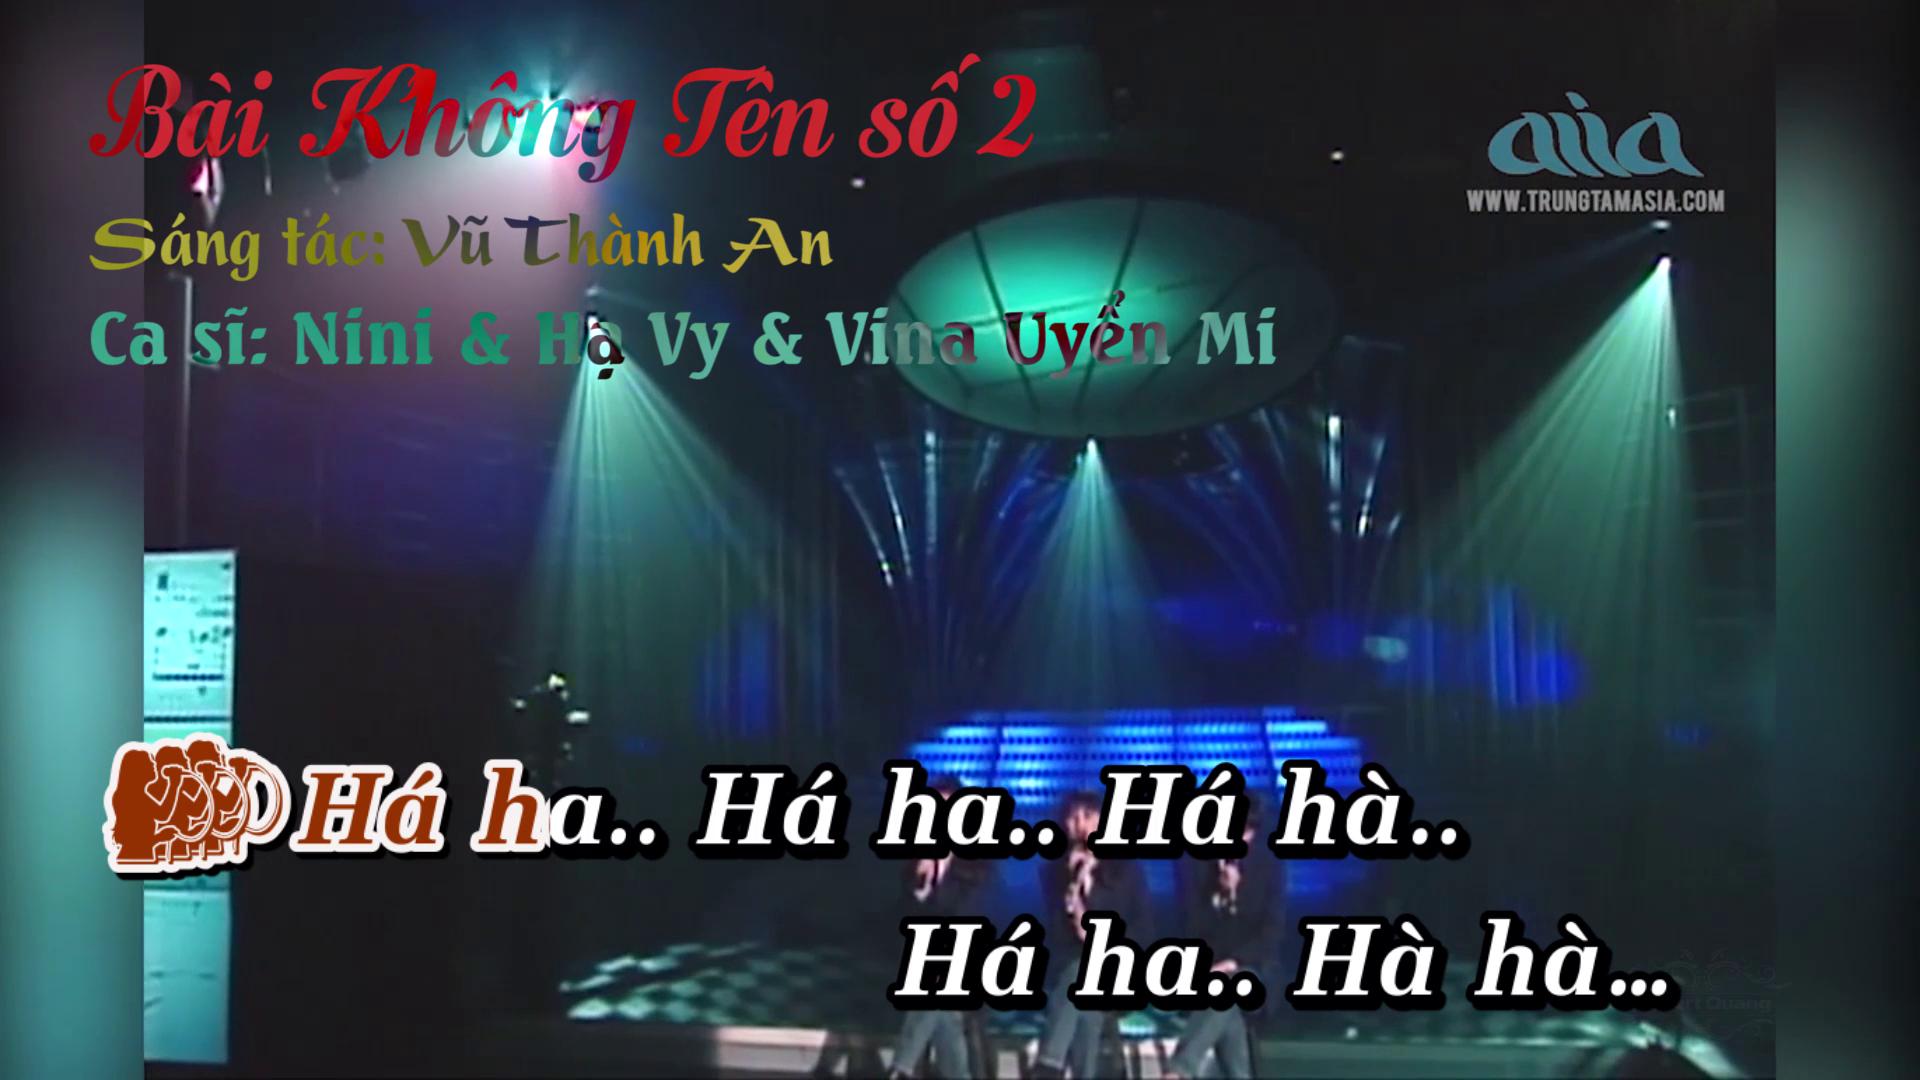 3-[1080P]-Bai Khong Ten So 2 - Nini_ Ha Vy_ Vina Uyen My.mkv.jpeg